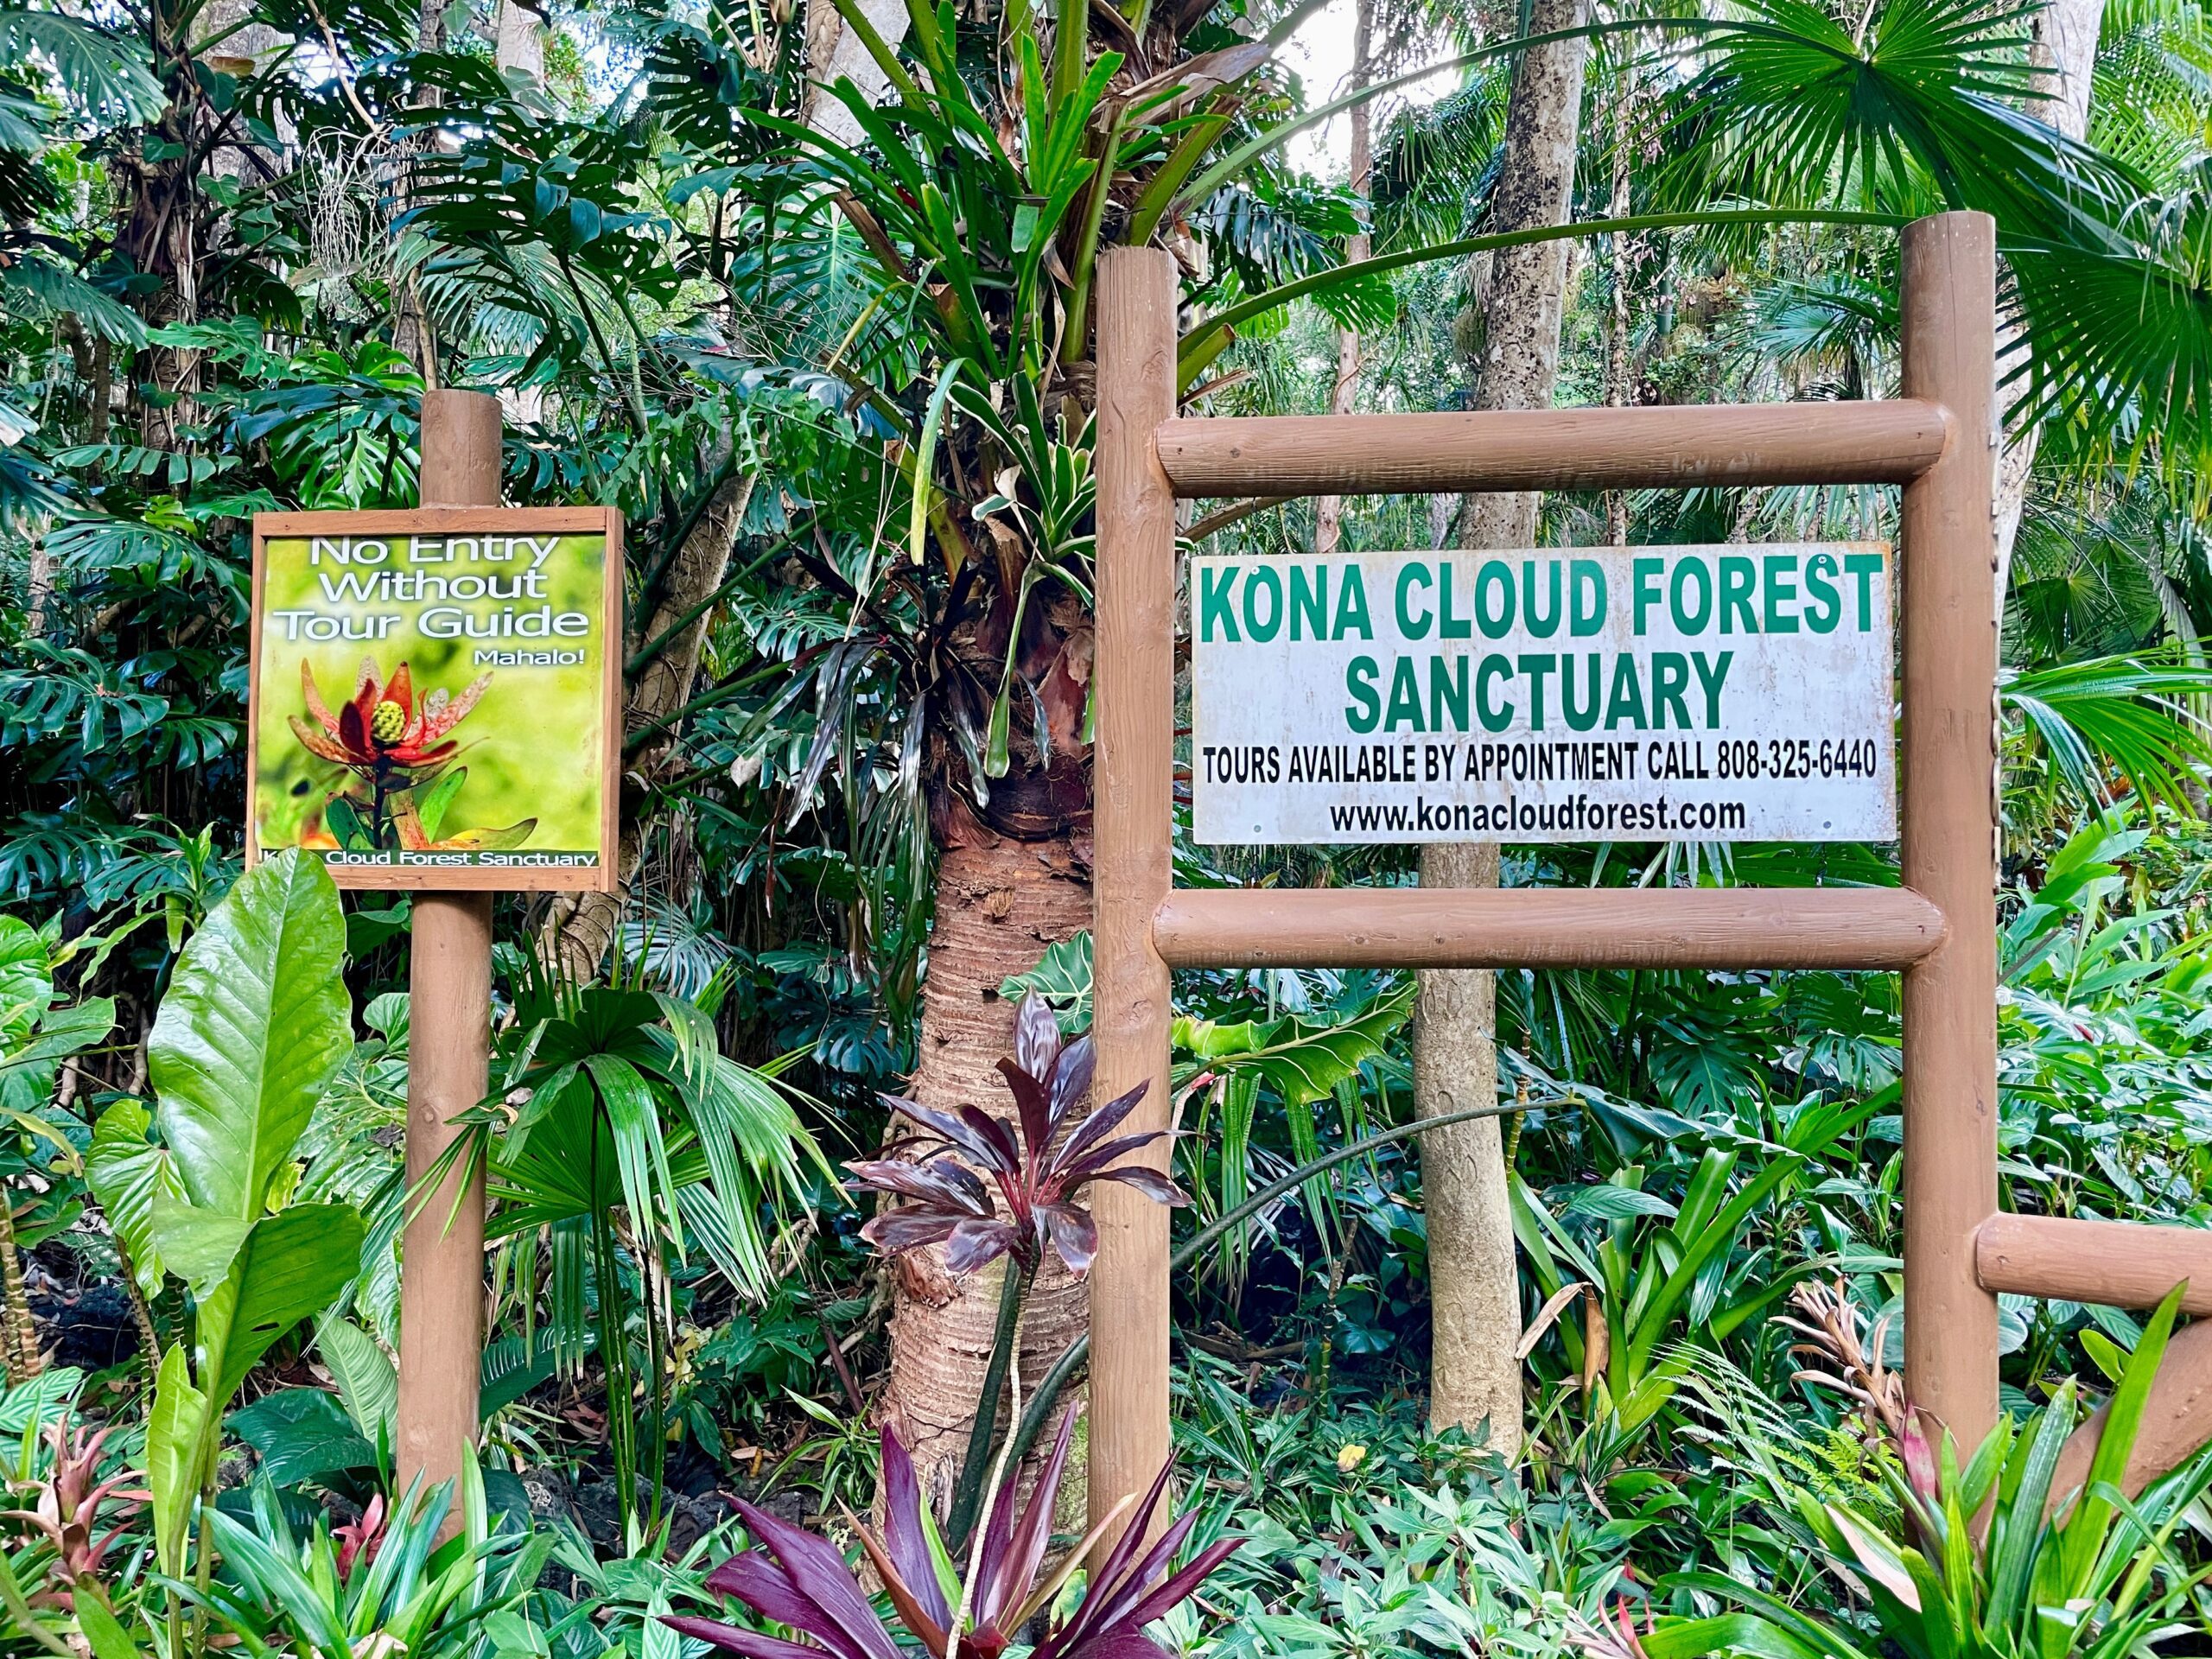 Entrance to the Kona Cloud Forest Sanctuary in Kona Hawaii